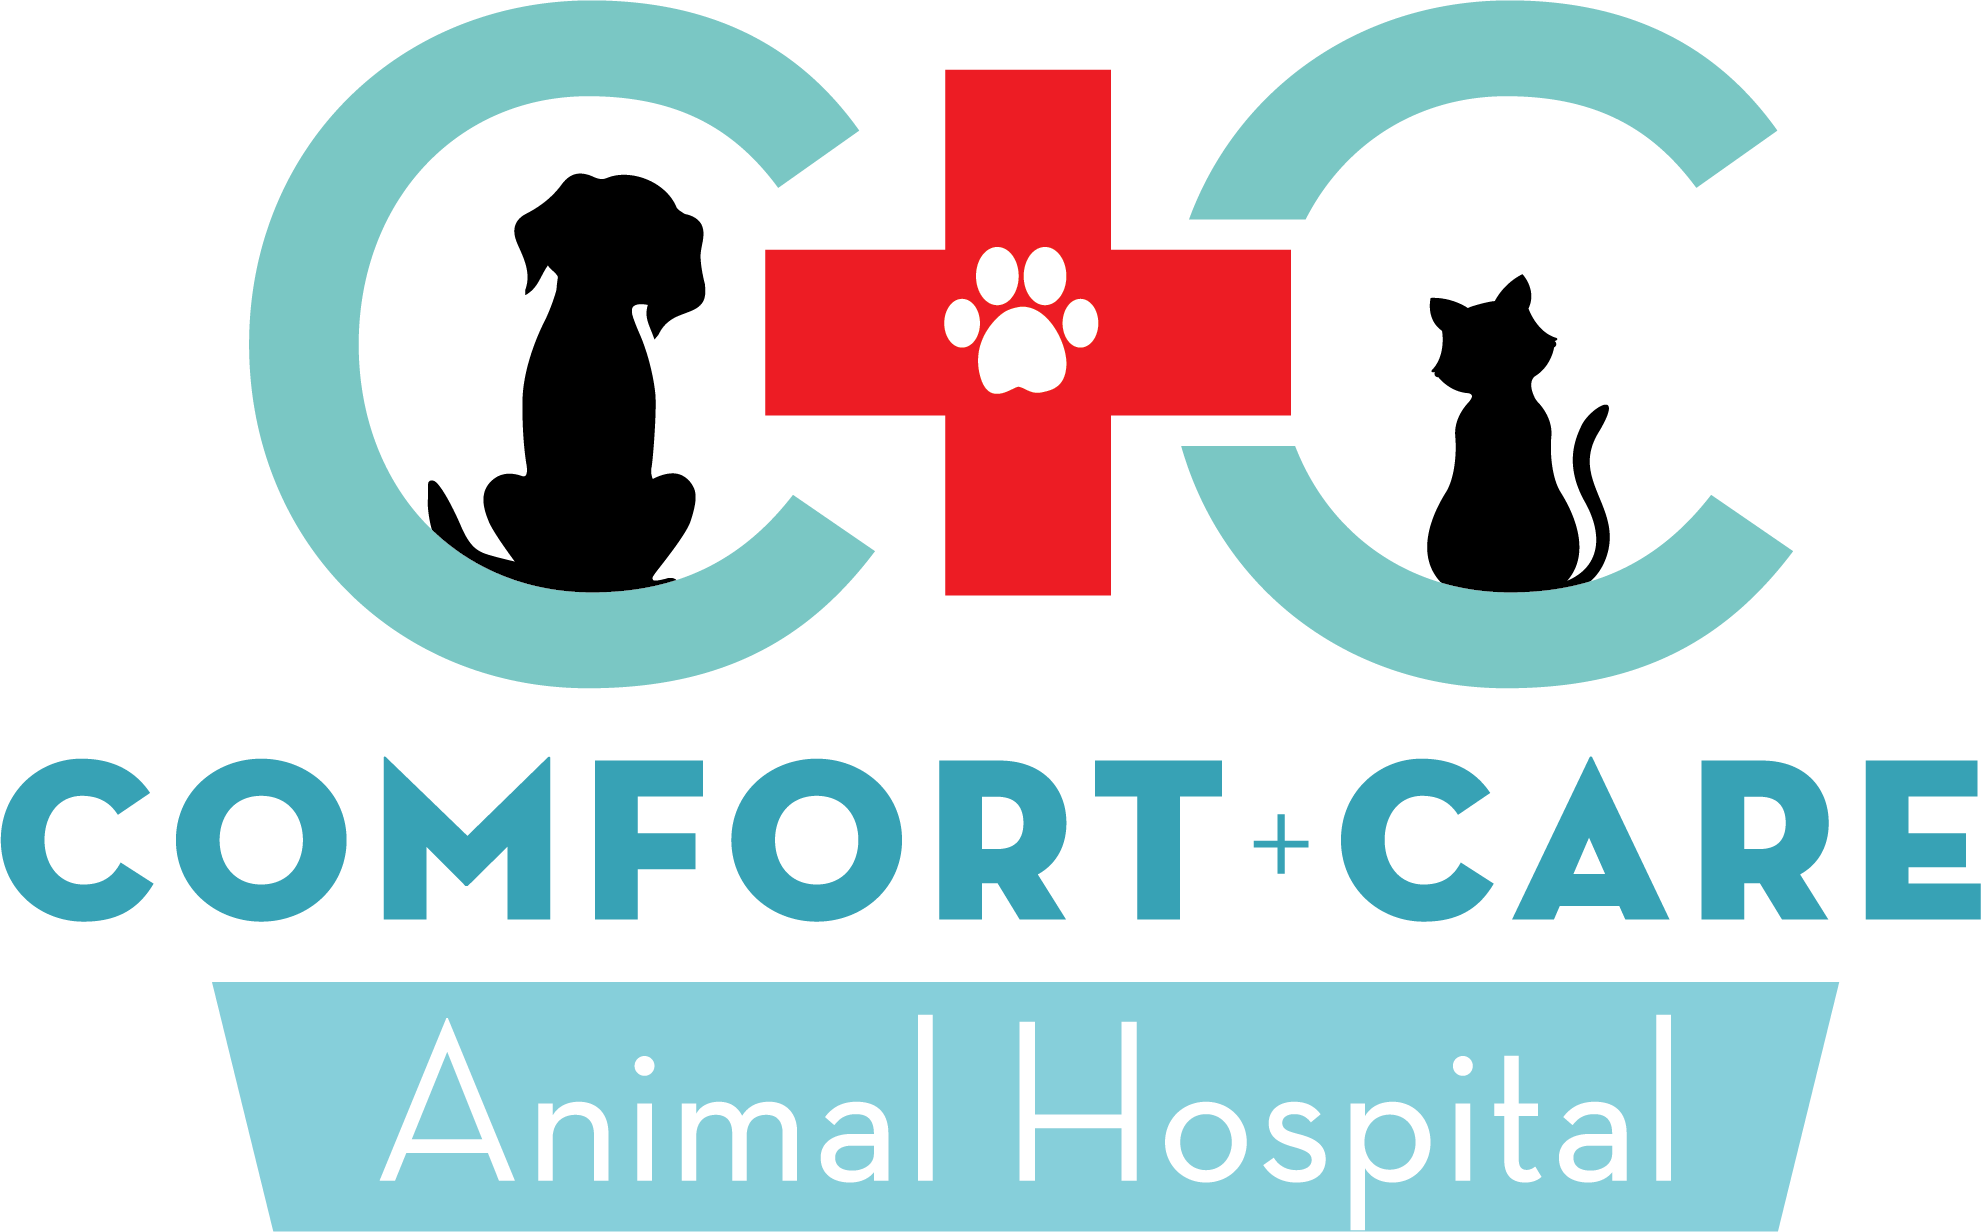 Comfort + Care Animal Hospital